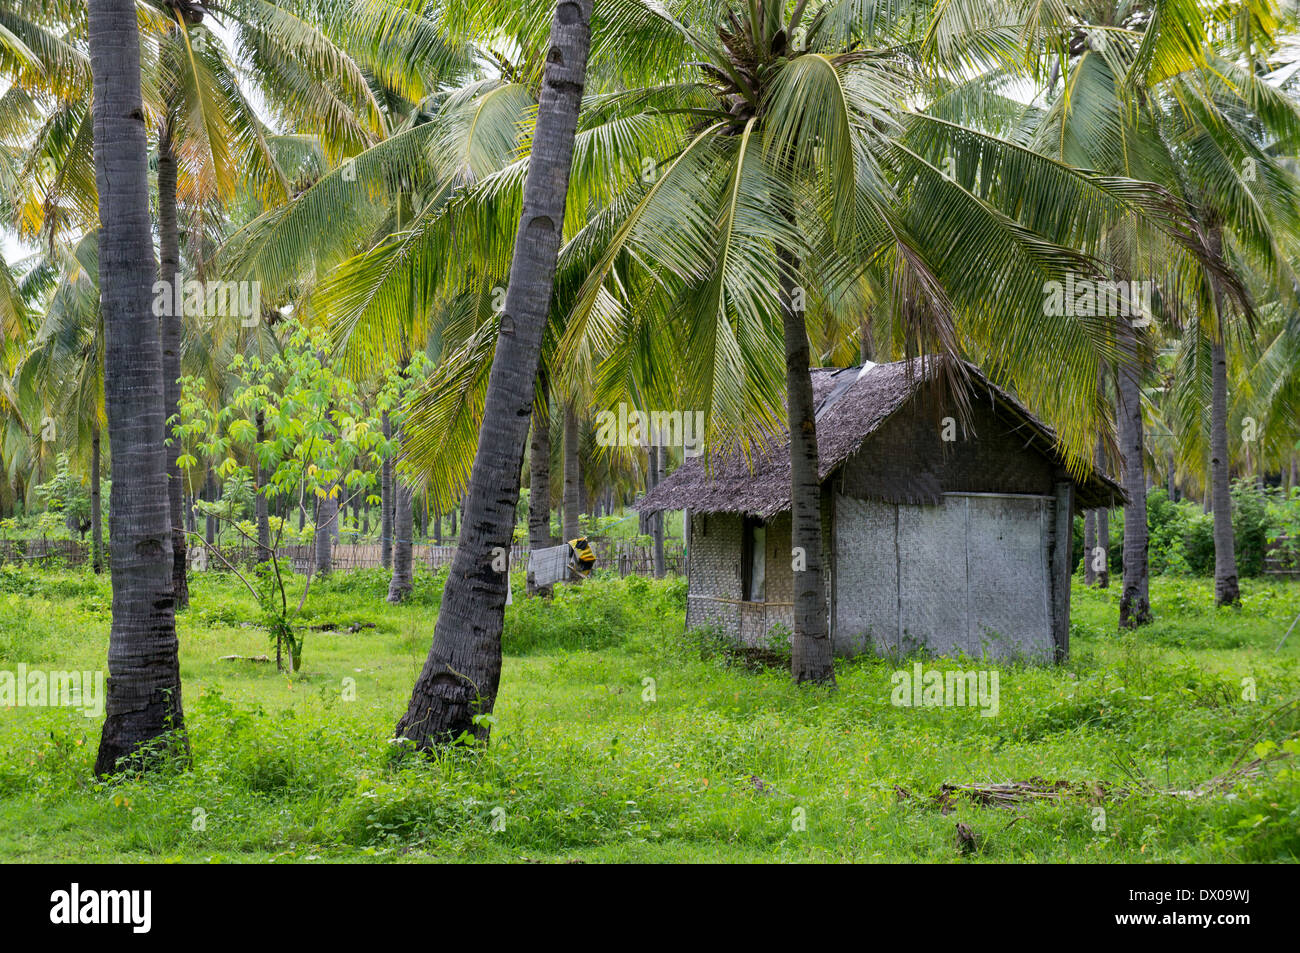 small house in a palm grove on the island of Gili islands, Trawangan, Indonesia Stock Photo